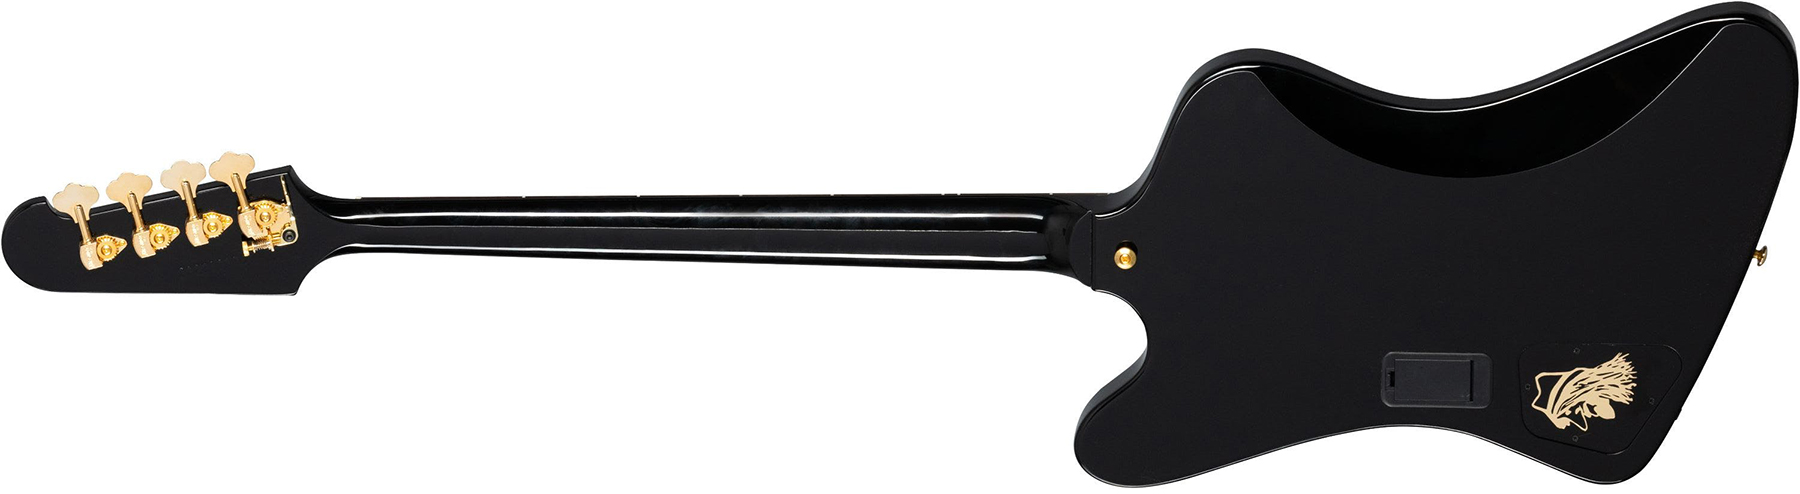 Gibson Rex Brown Thunderbird Signature Active Rw - Ebony - Solid body elektrische bas - Variation 1